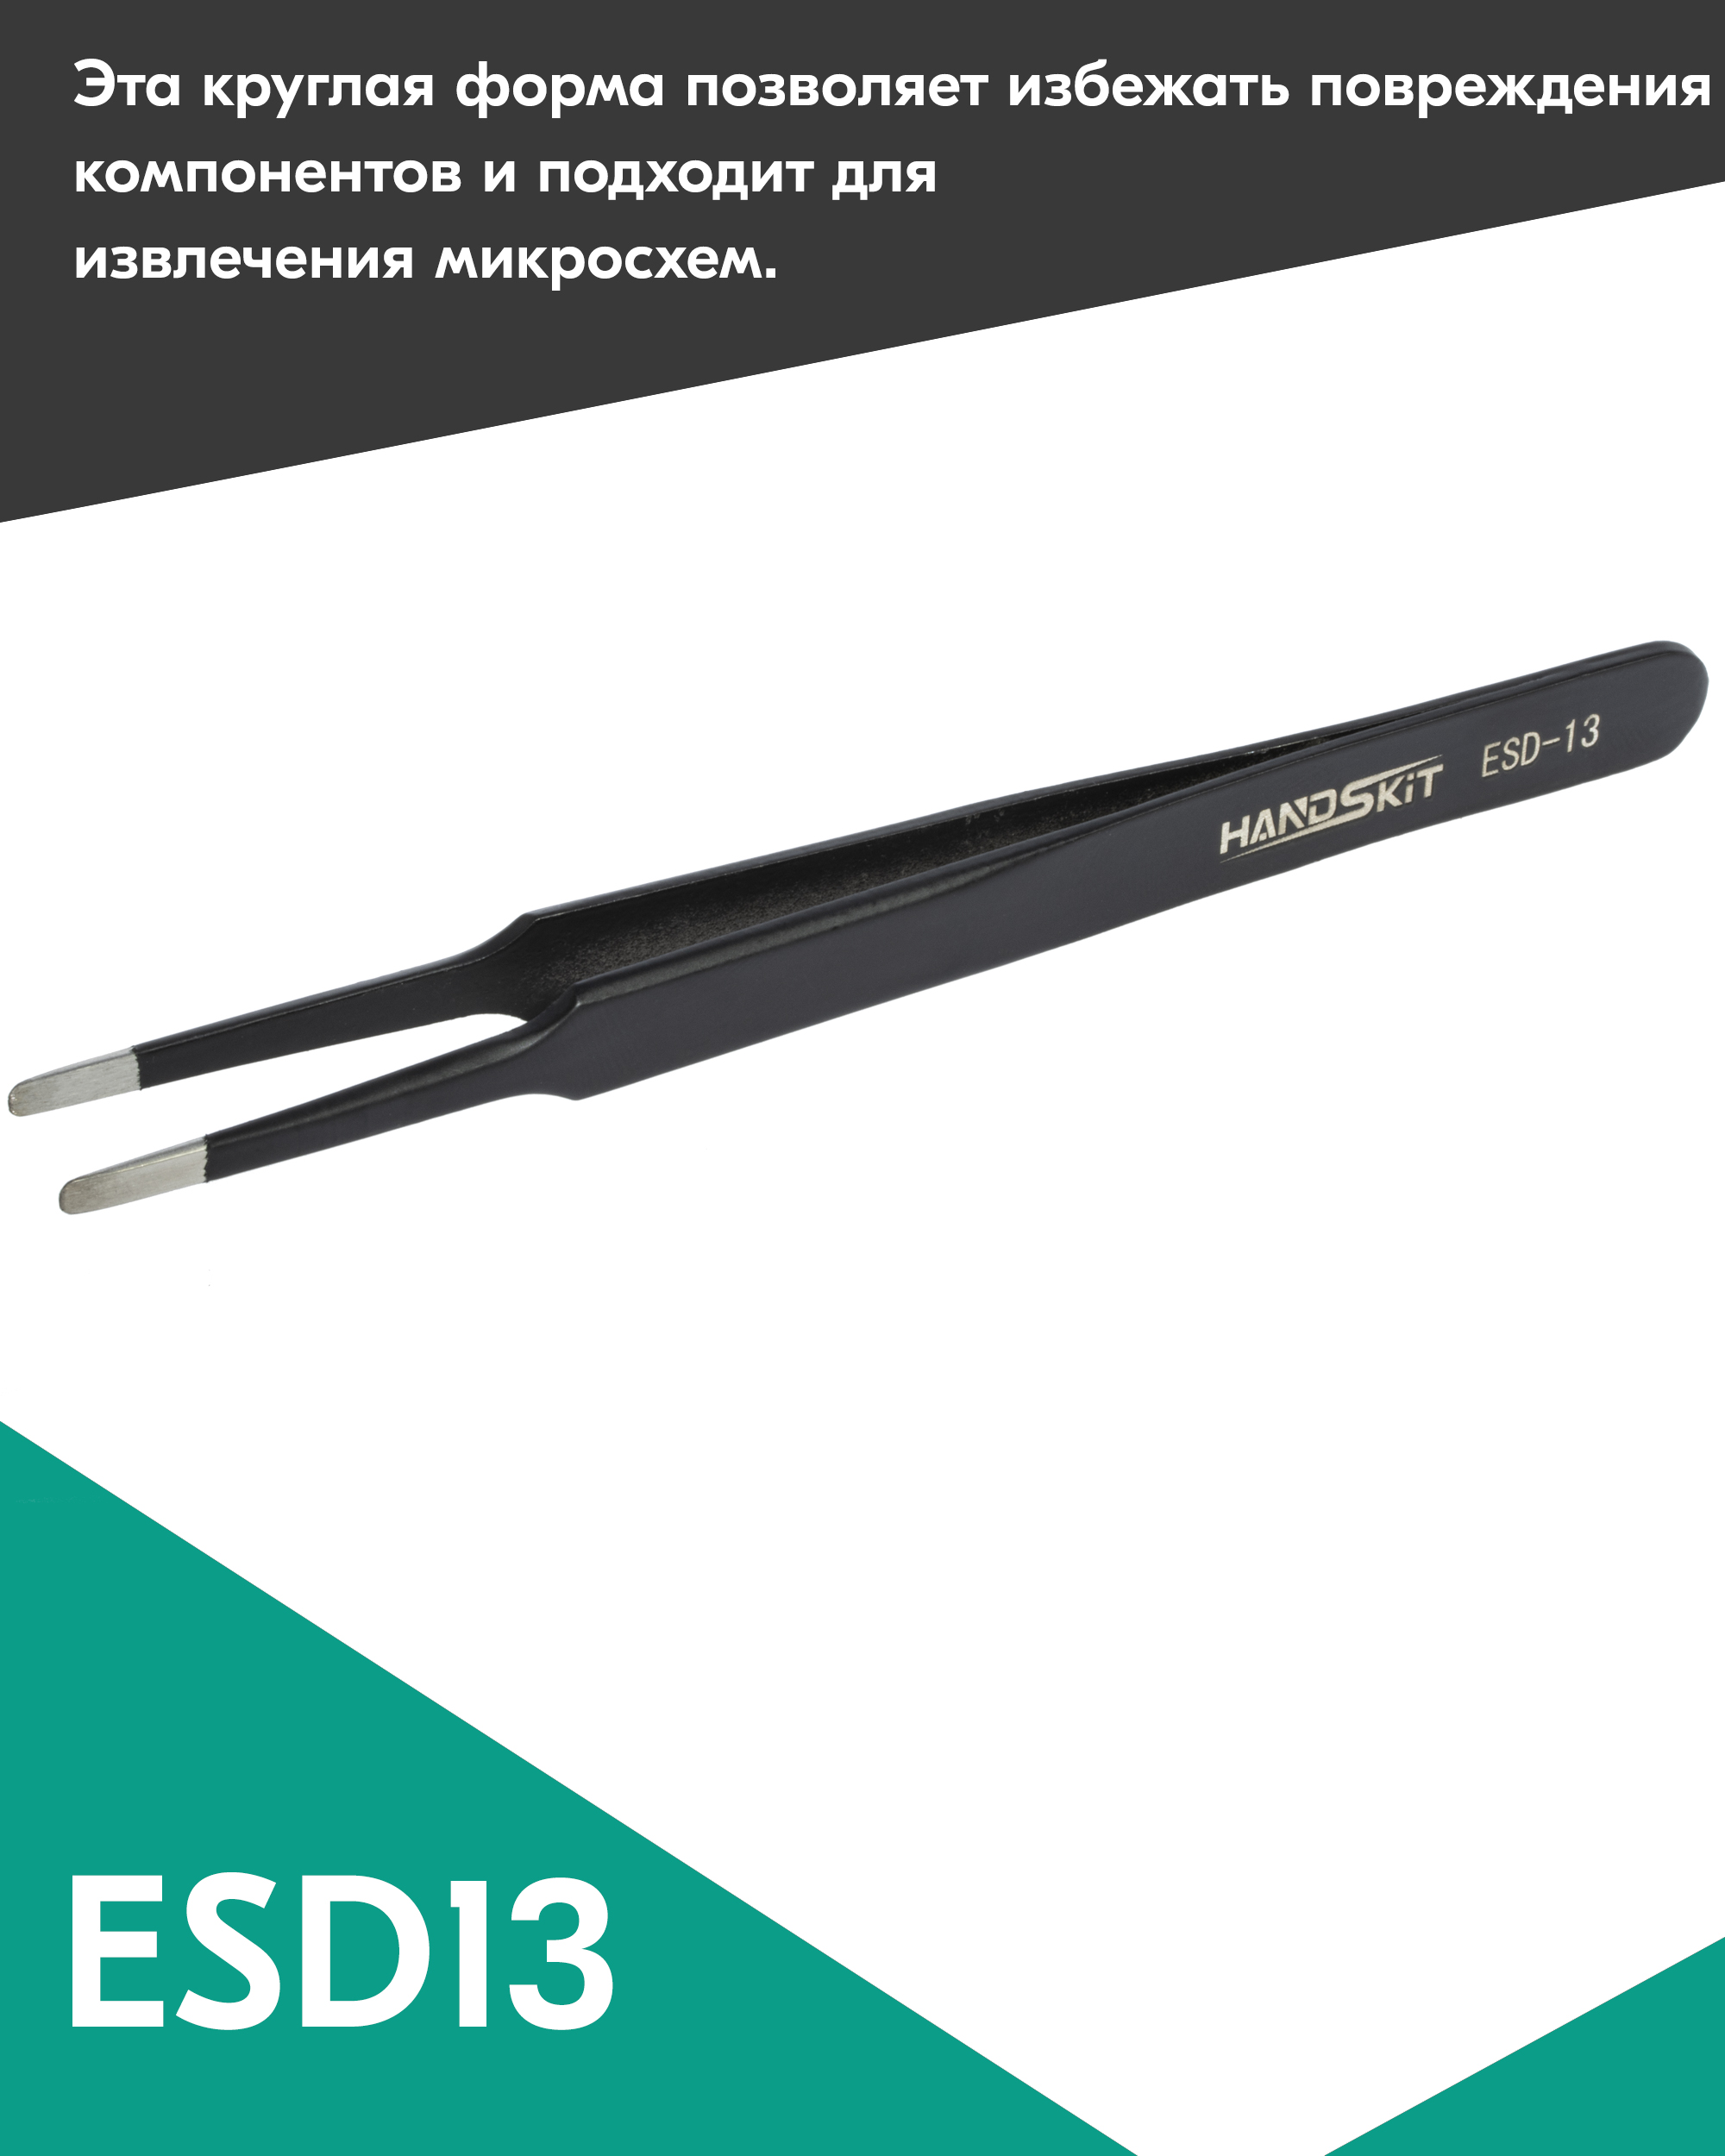 Пинцет диэлектрический HANDSKIT ESD13 (120 мм) пинцет диэлектрический handskit esd15 120 мм